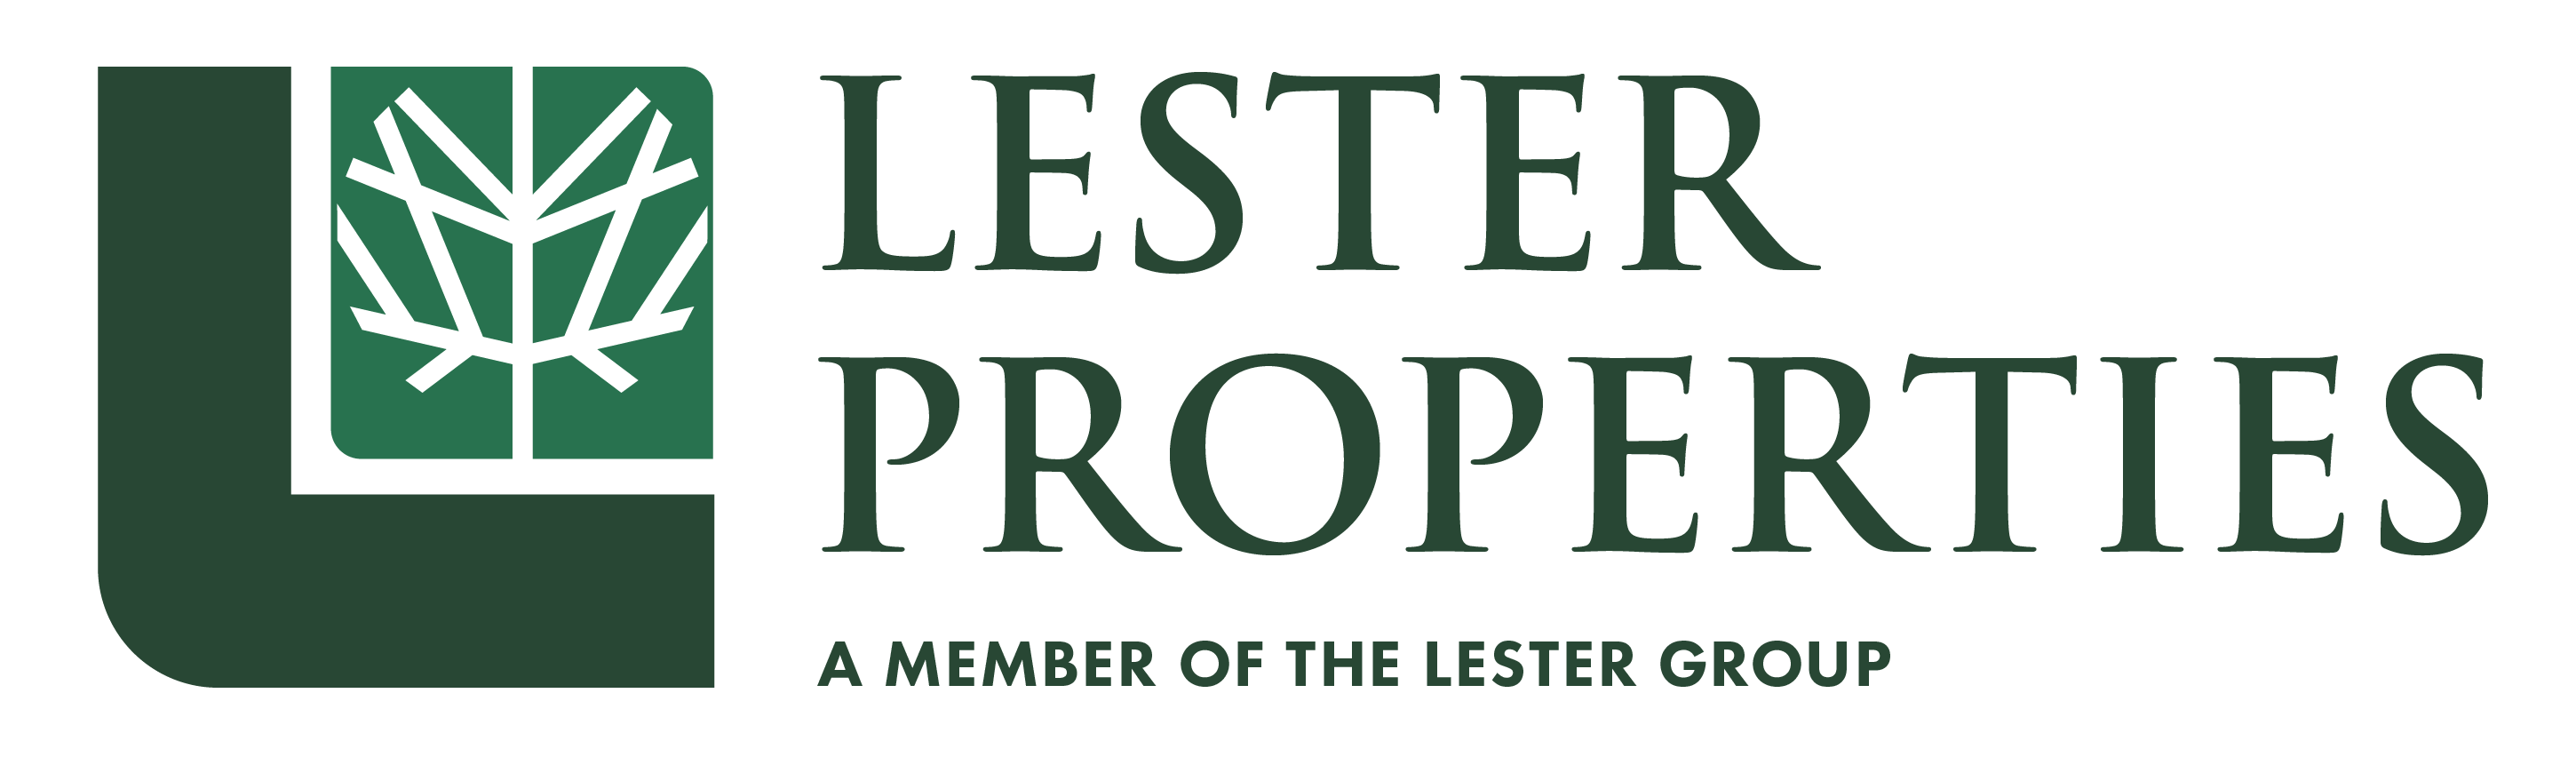 TLG_LesterProperties_Logo_RGB